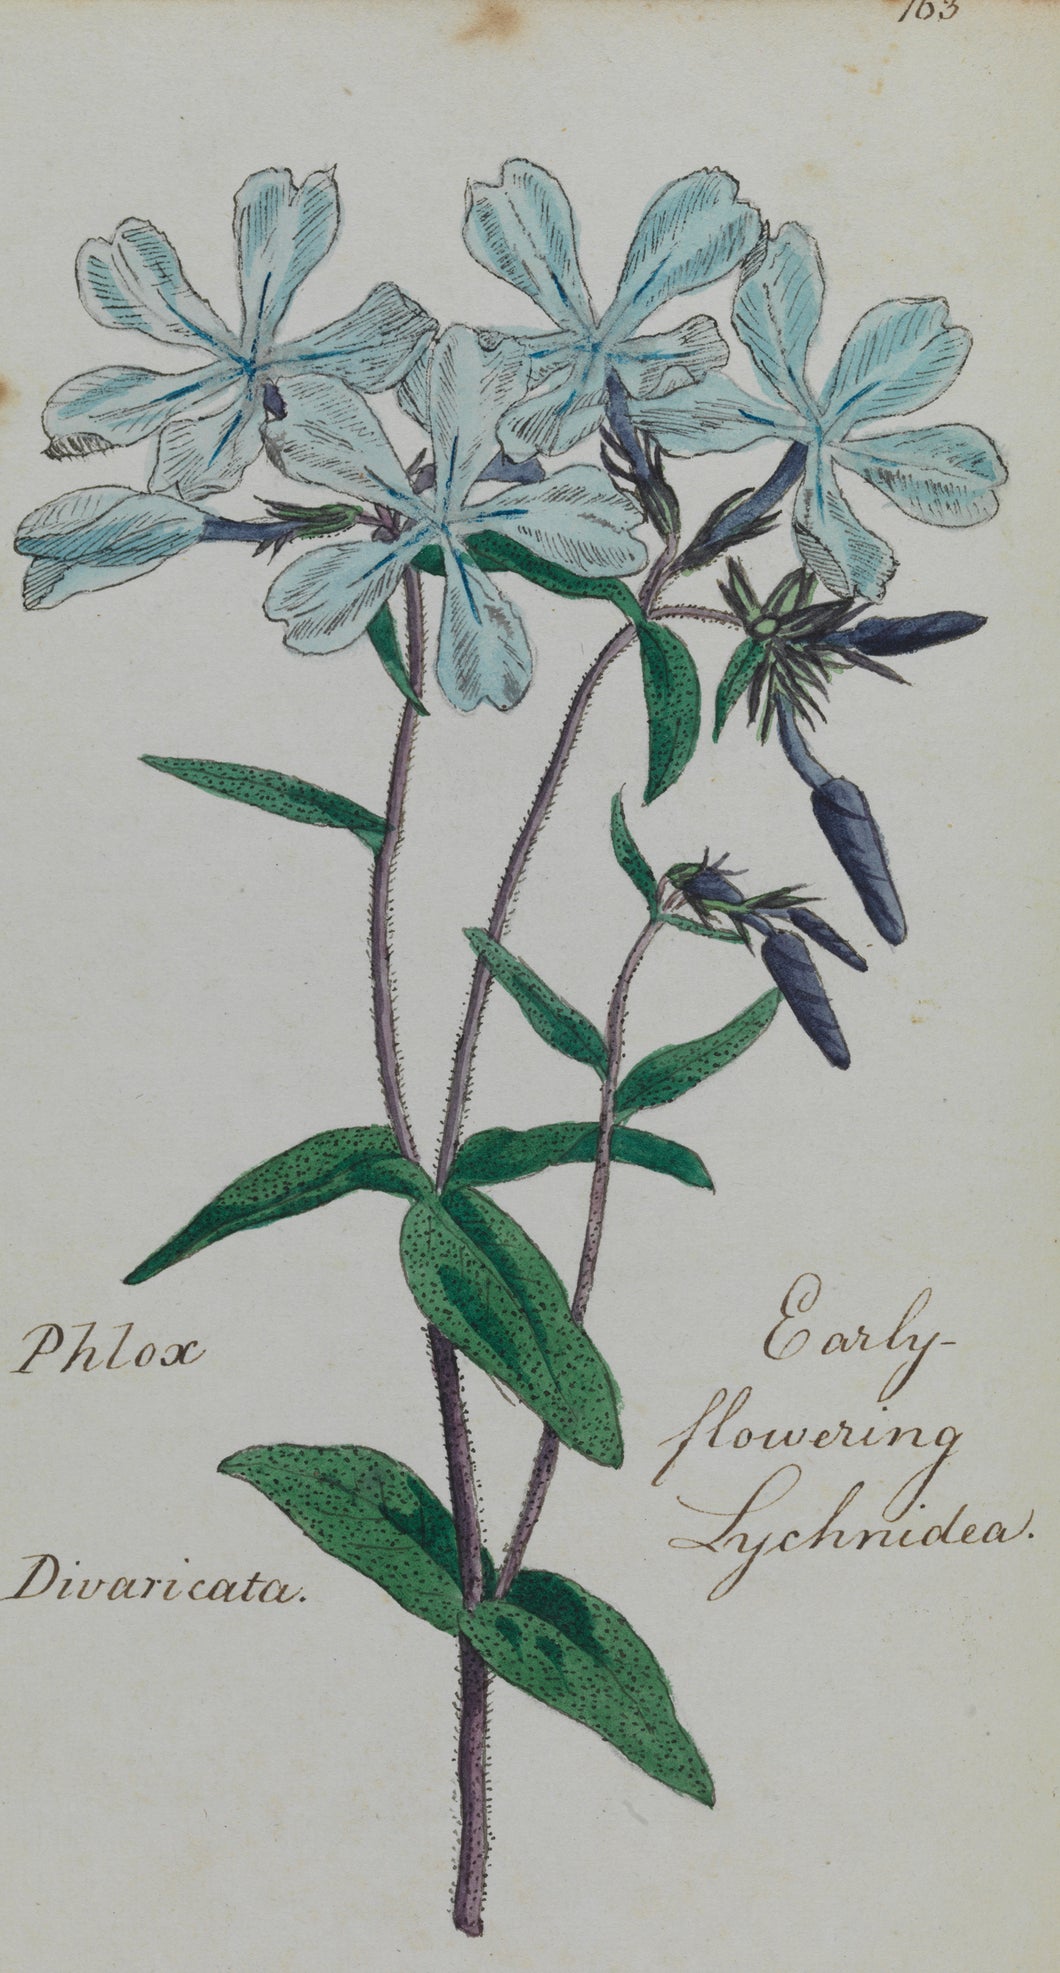 Early-flowering Lychnidea